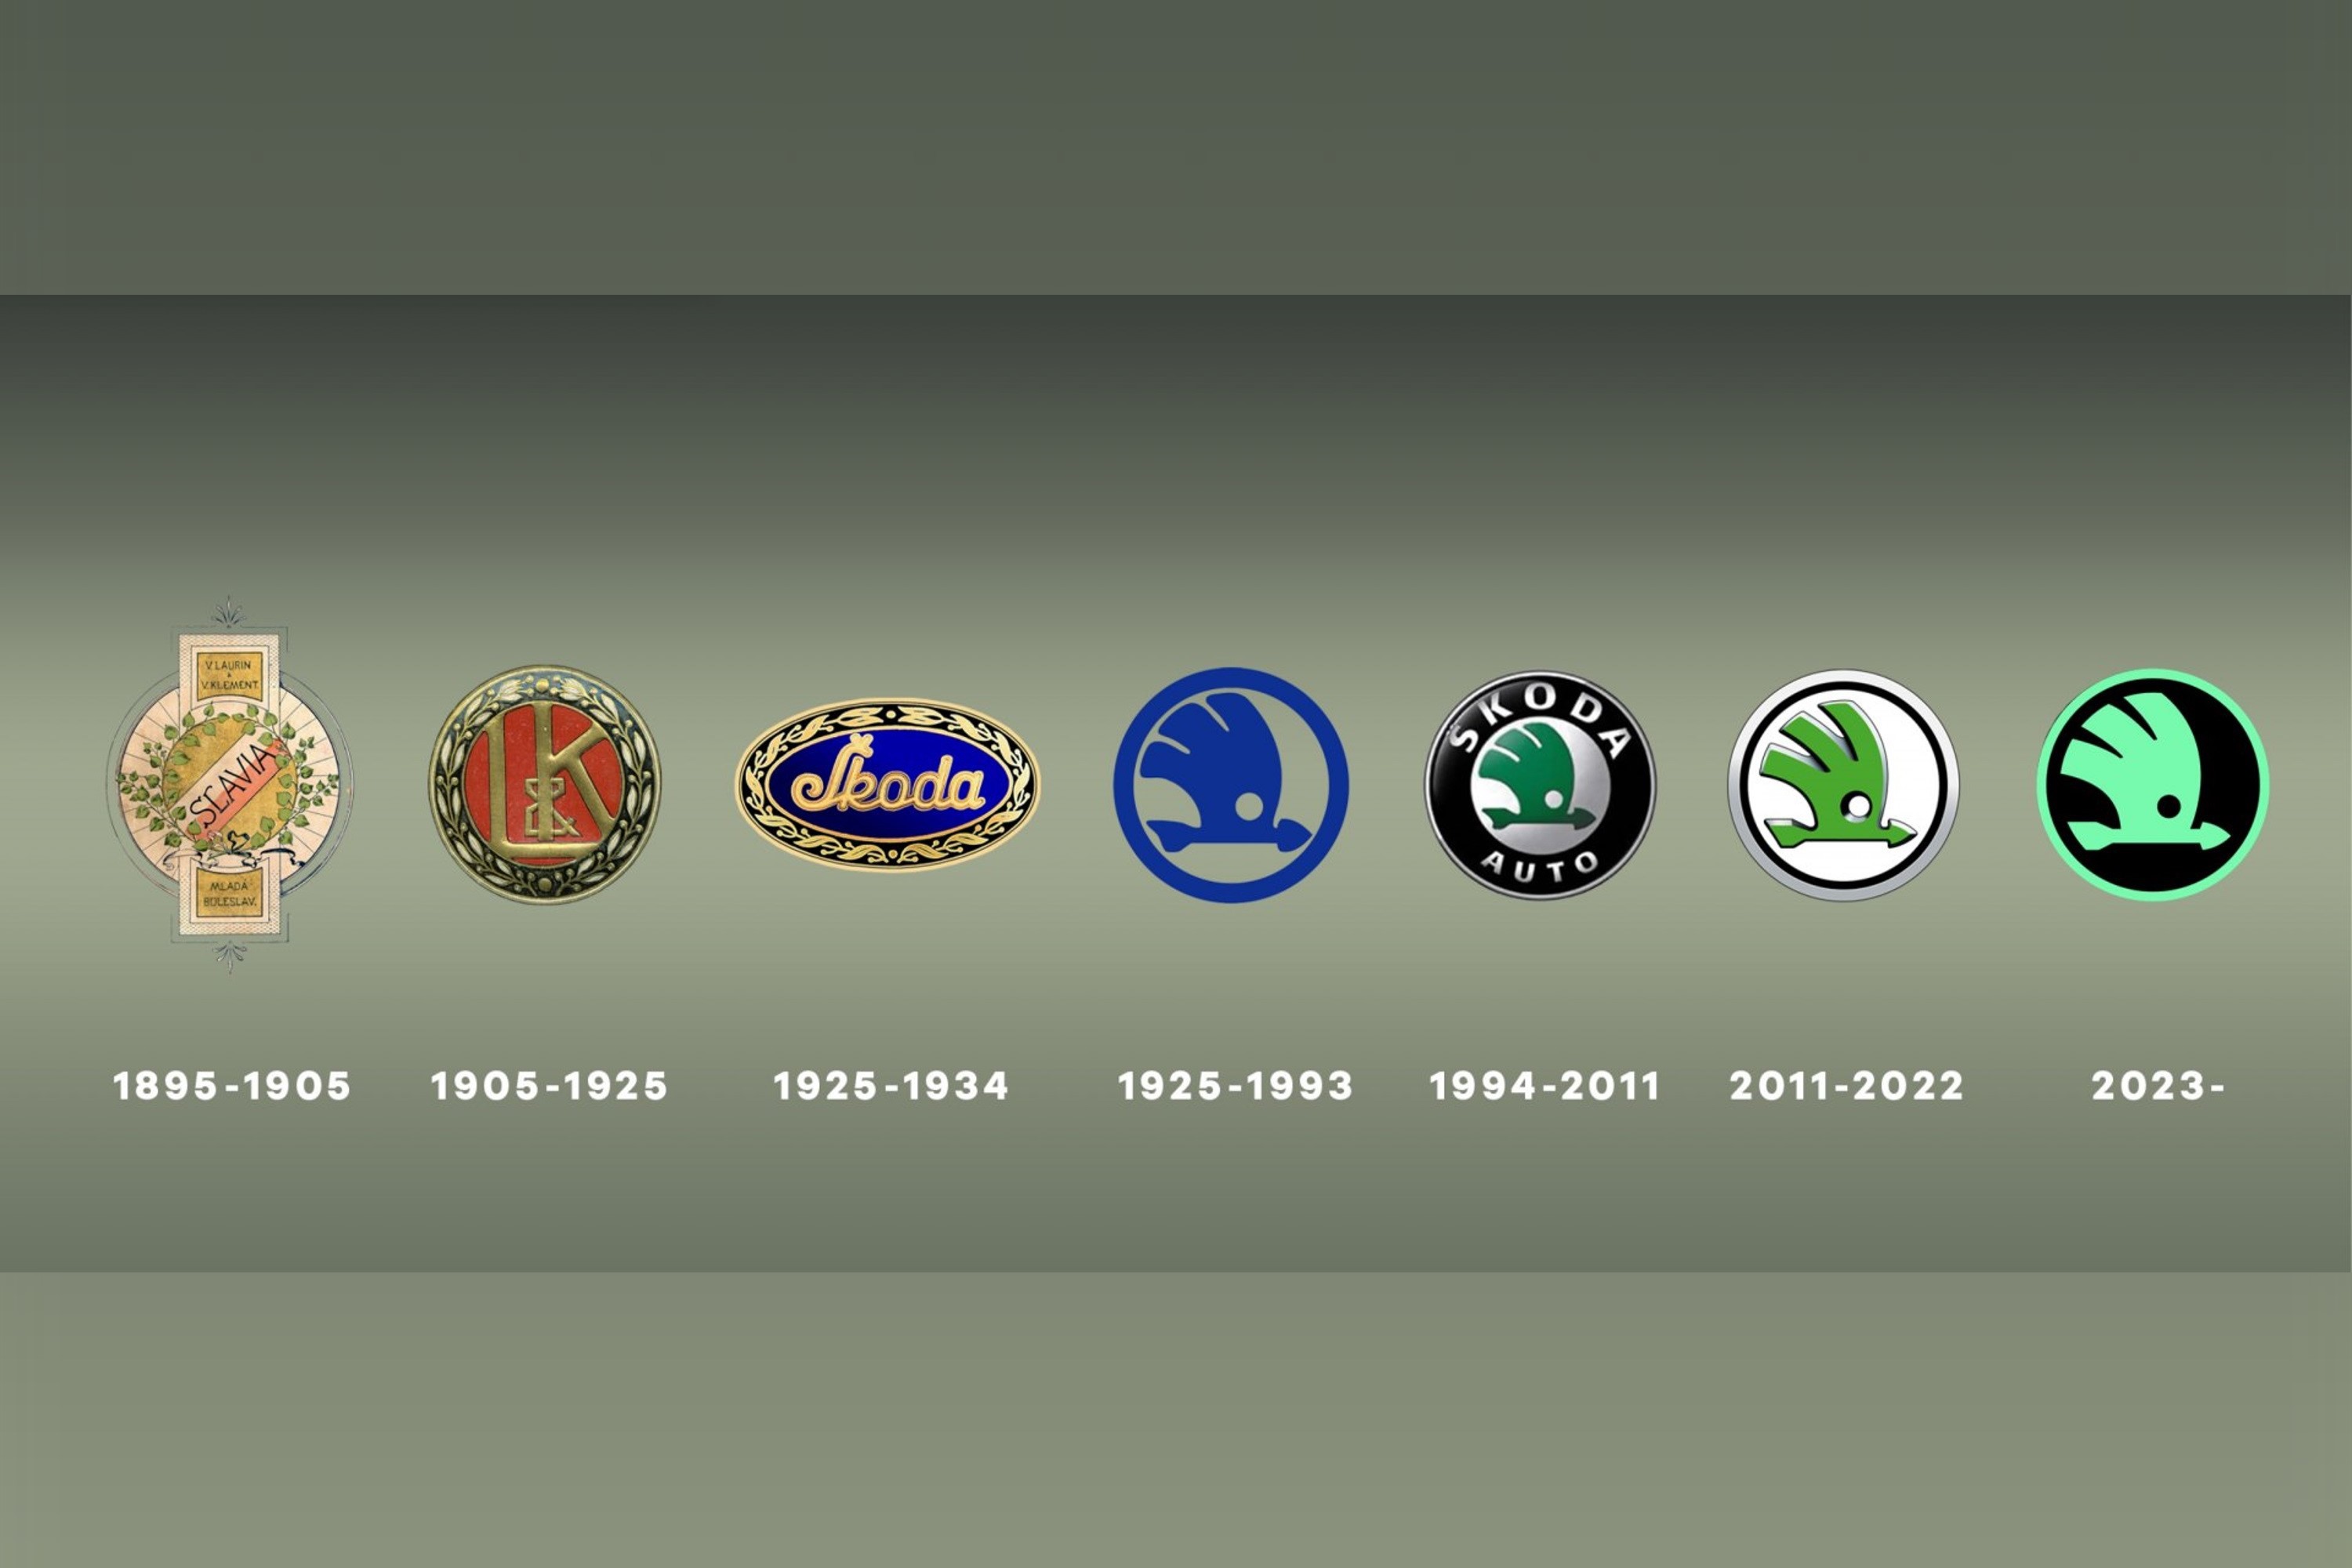 skoda-logos-1895-2022-mk